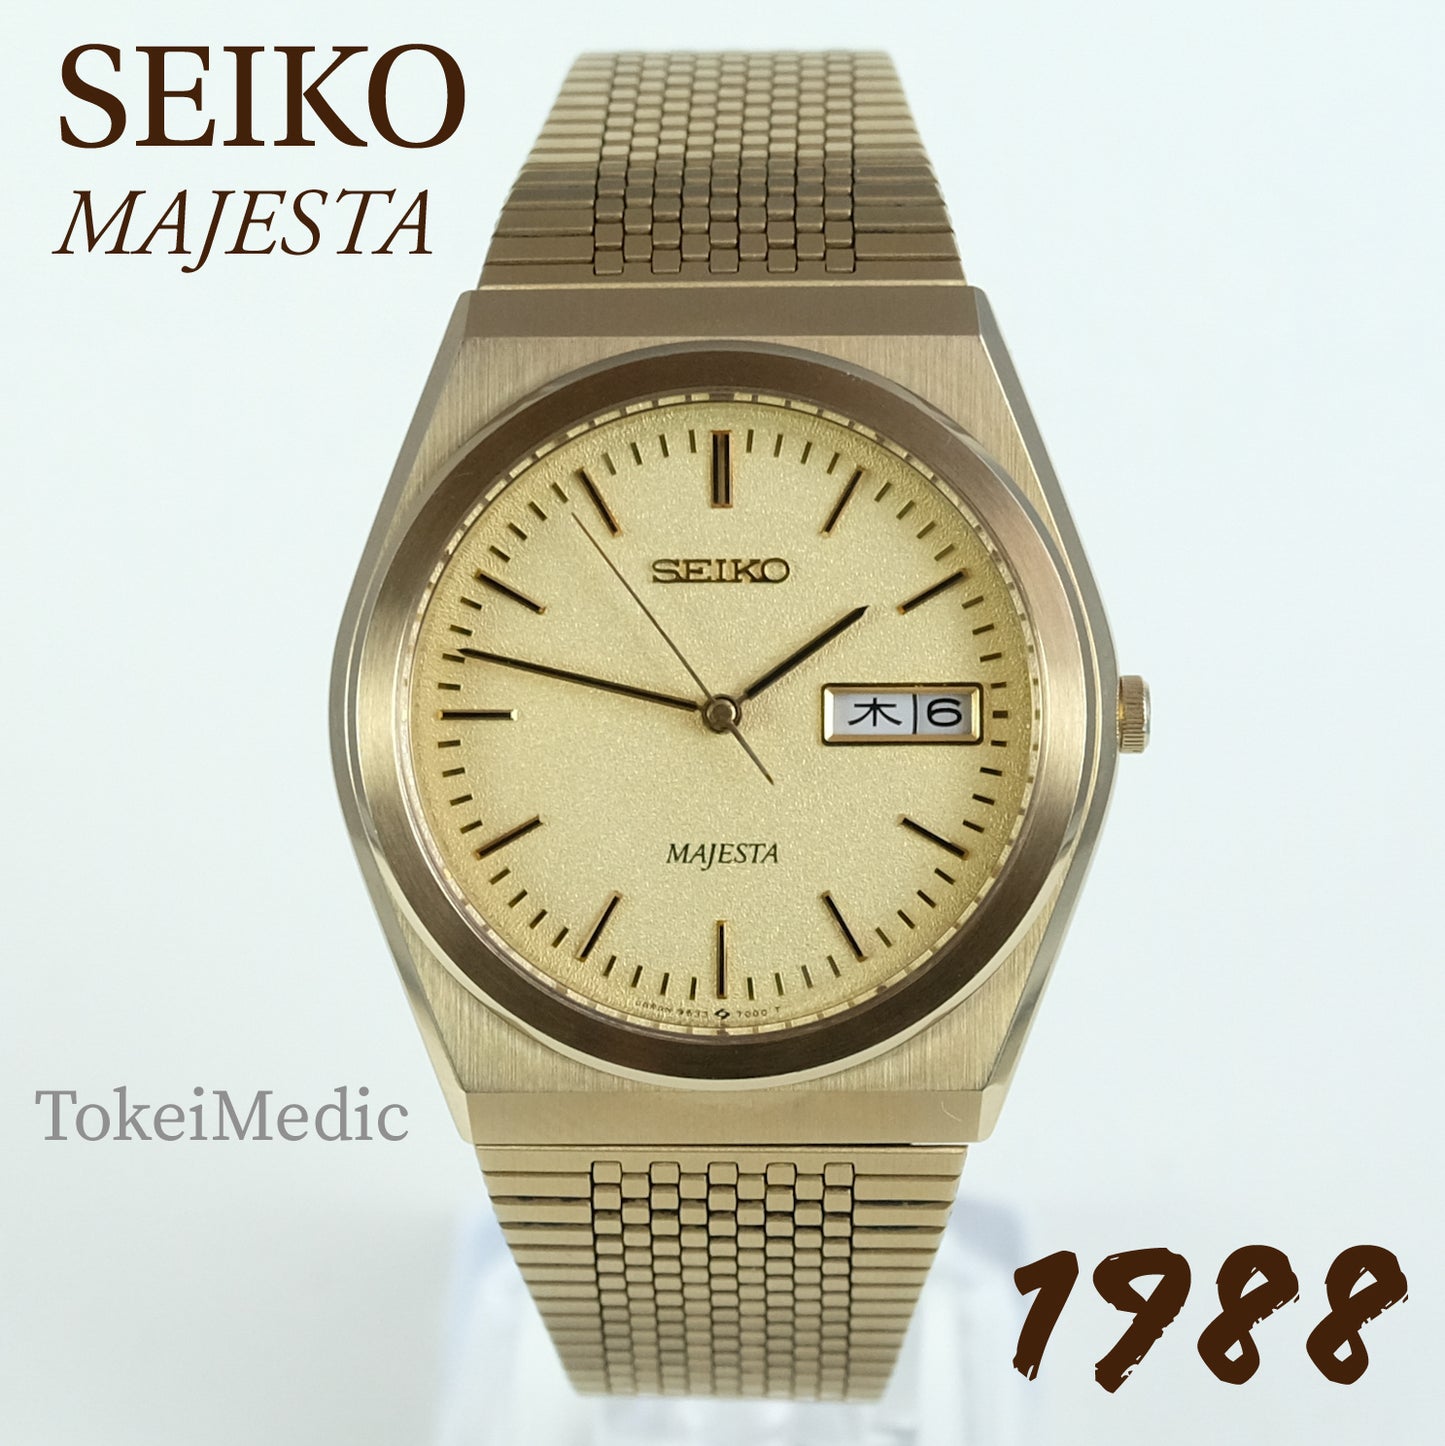 1988 Seiko Majesta 9533-7000